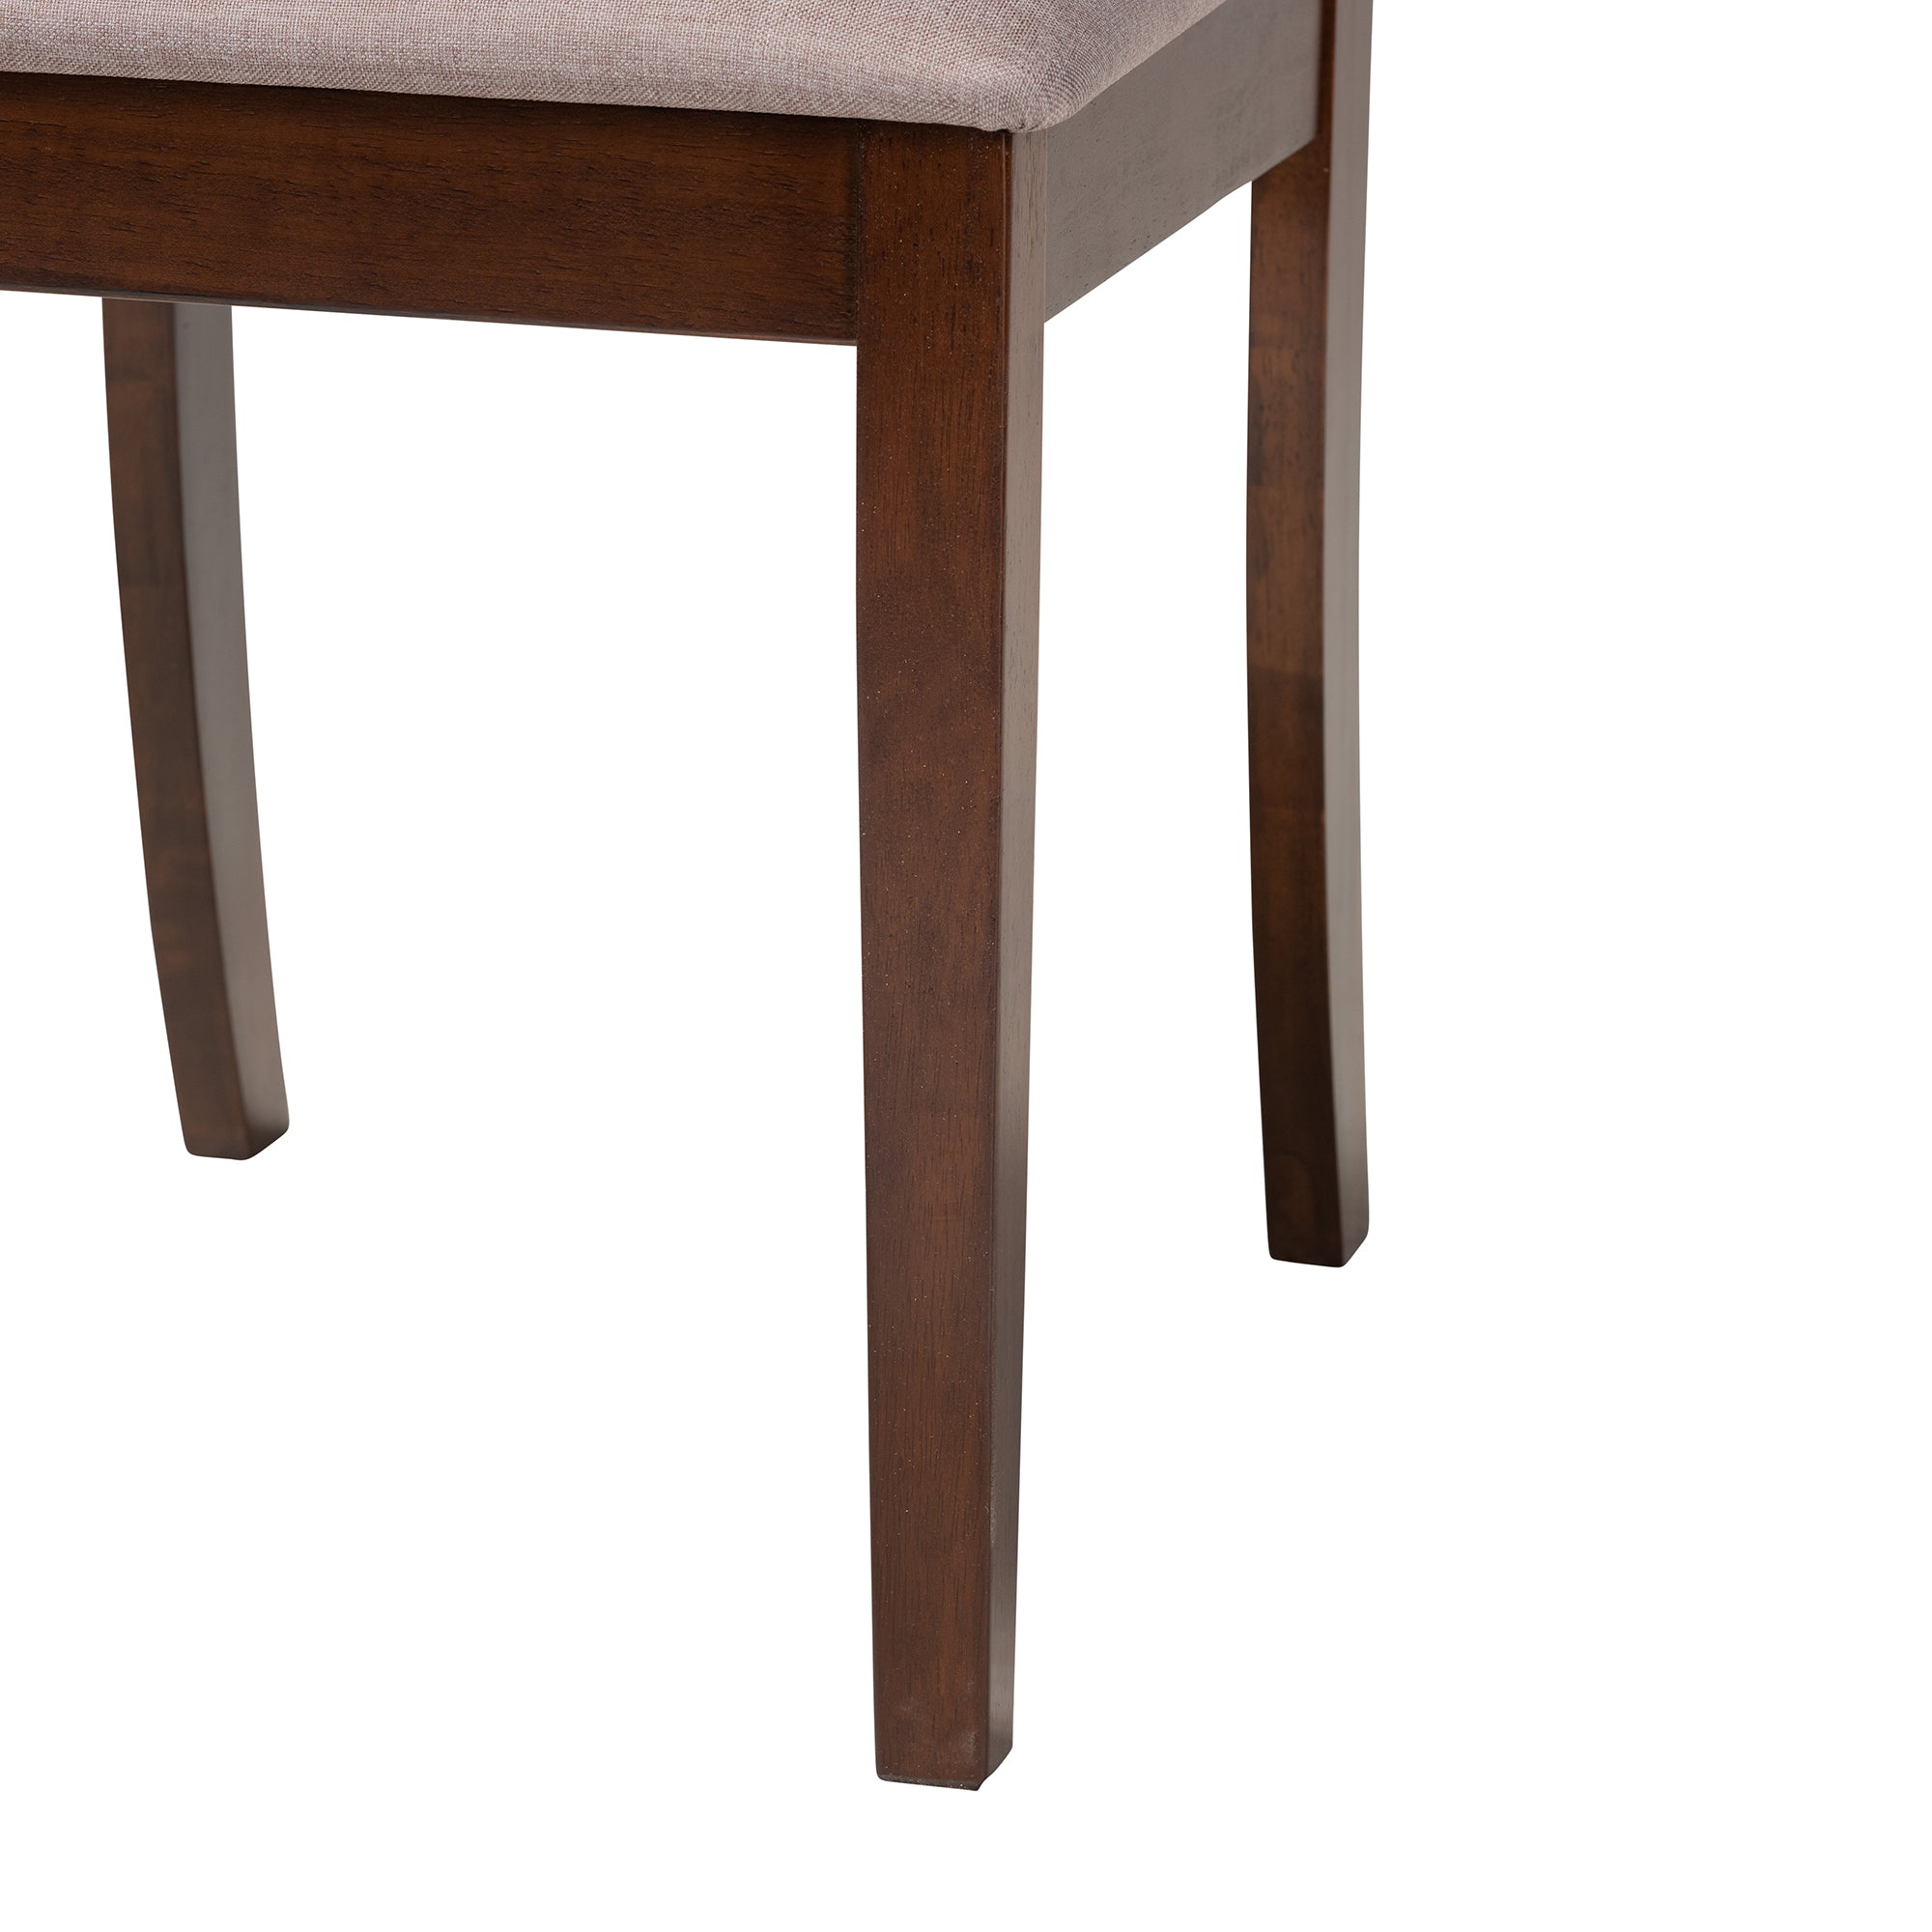 Carola Mid-Century Table & Dining Chairs-Dining Set-Baxton Studio - WI-Wall2Wall Furnishings